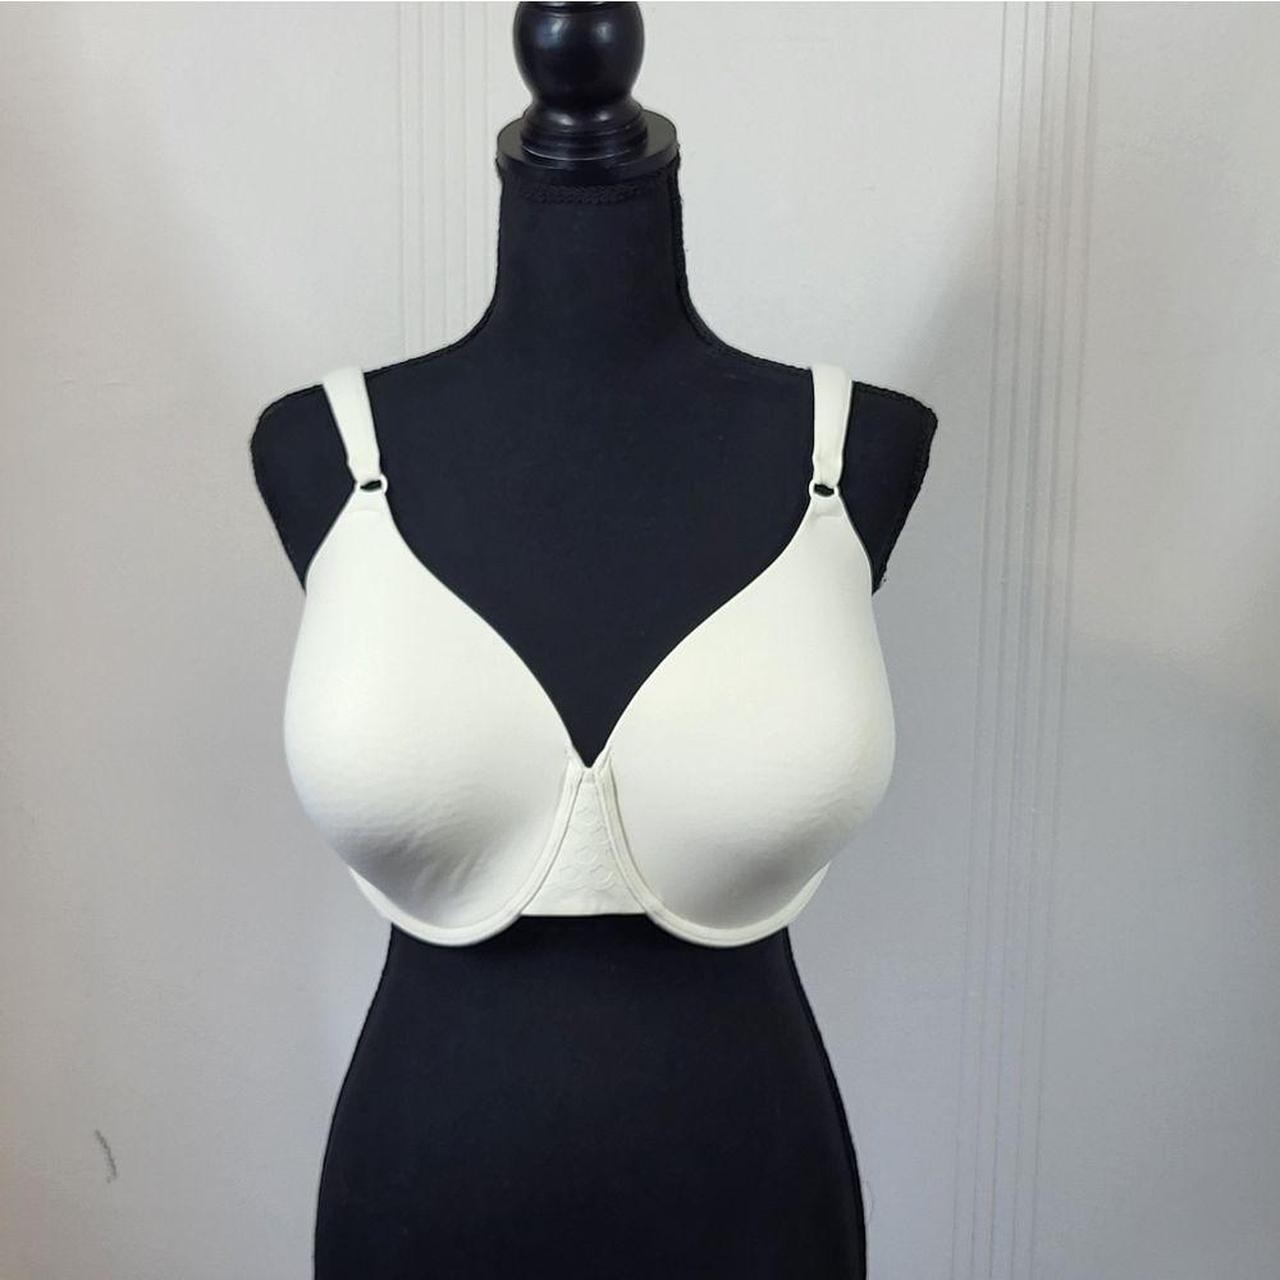 Product Image 1 - Olga bra. Size 40DD. EXCELLENT